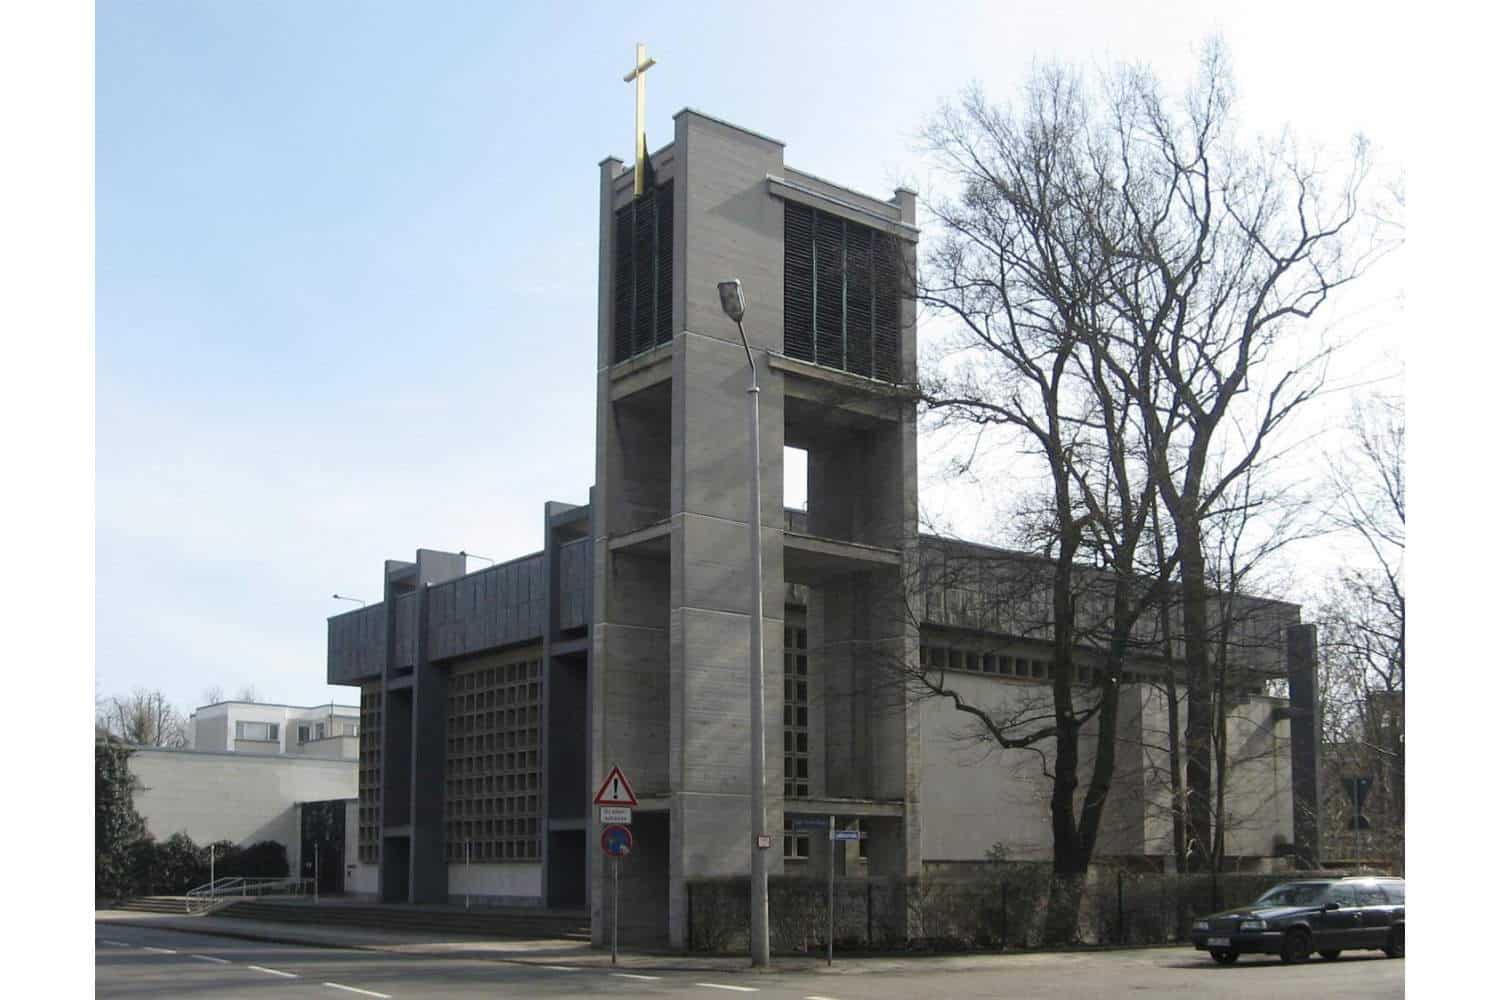 Glockenturm vor Trinitatiskirche Leipzig (2010). Foto: Lumu, CC BY-SA 3.0, https://commons.wikimedia.org/w/index.php?curid=15933157